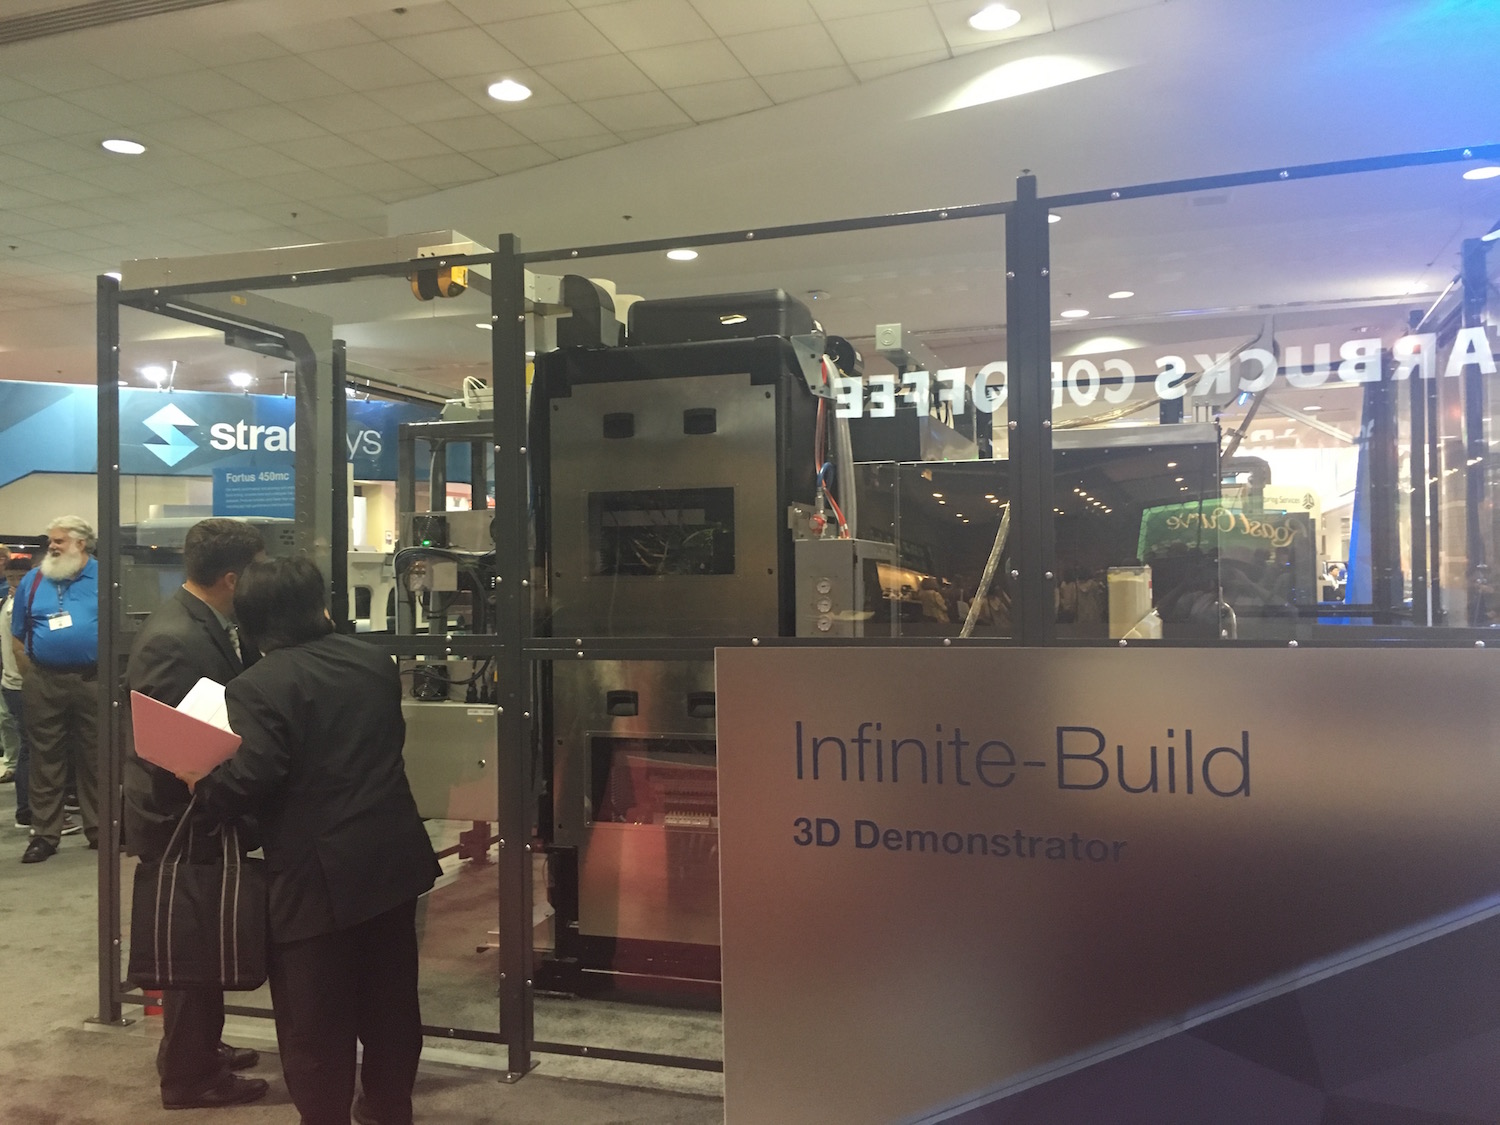  Stratasys' Infinite Build 3D demonstrator at IMTS 